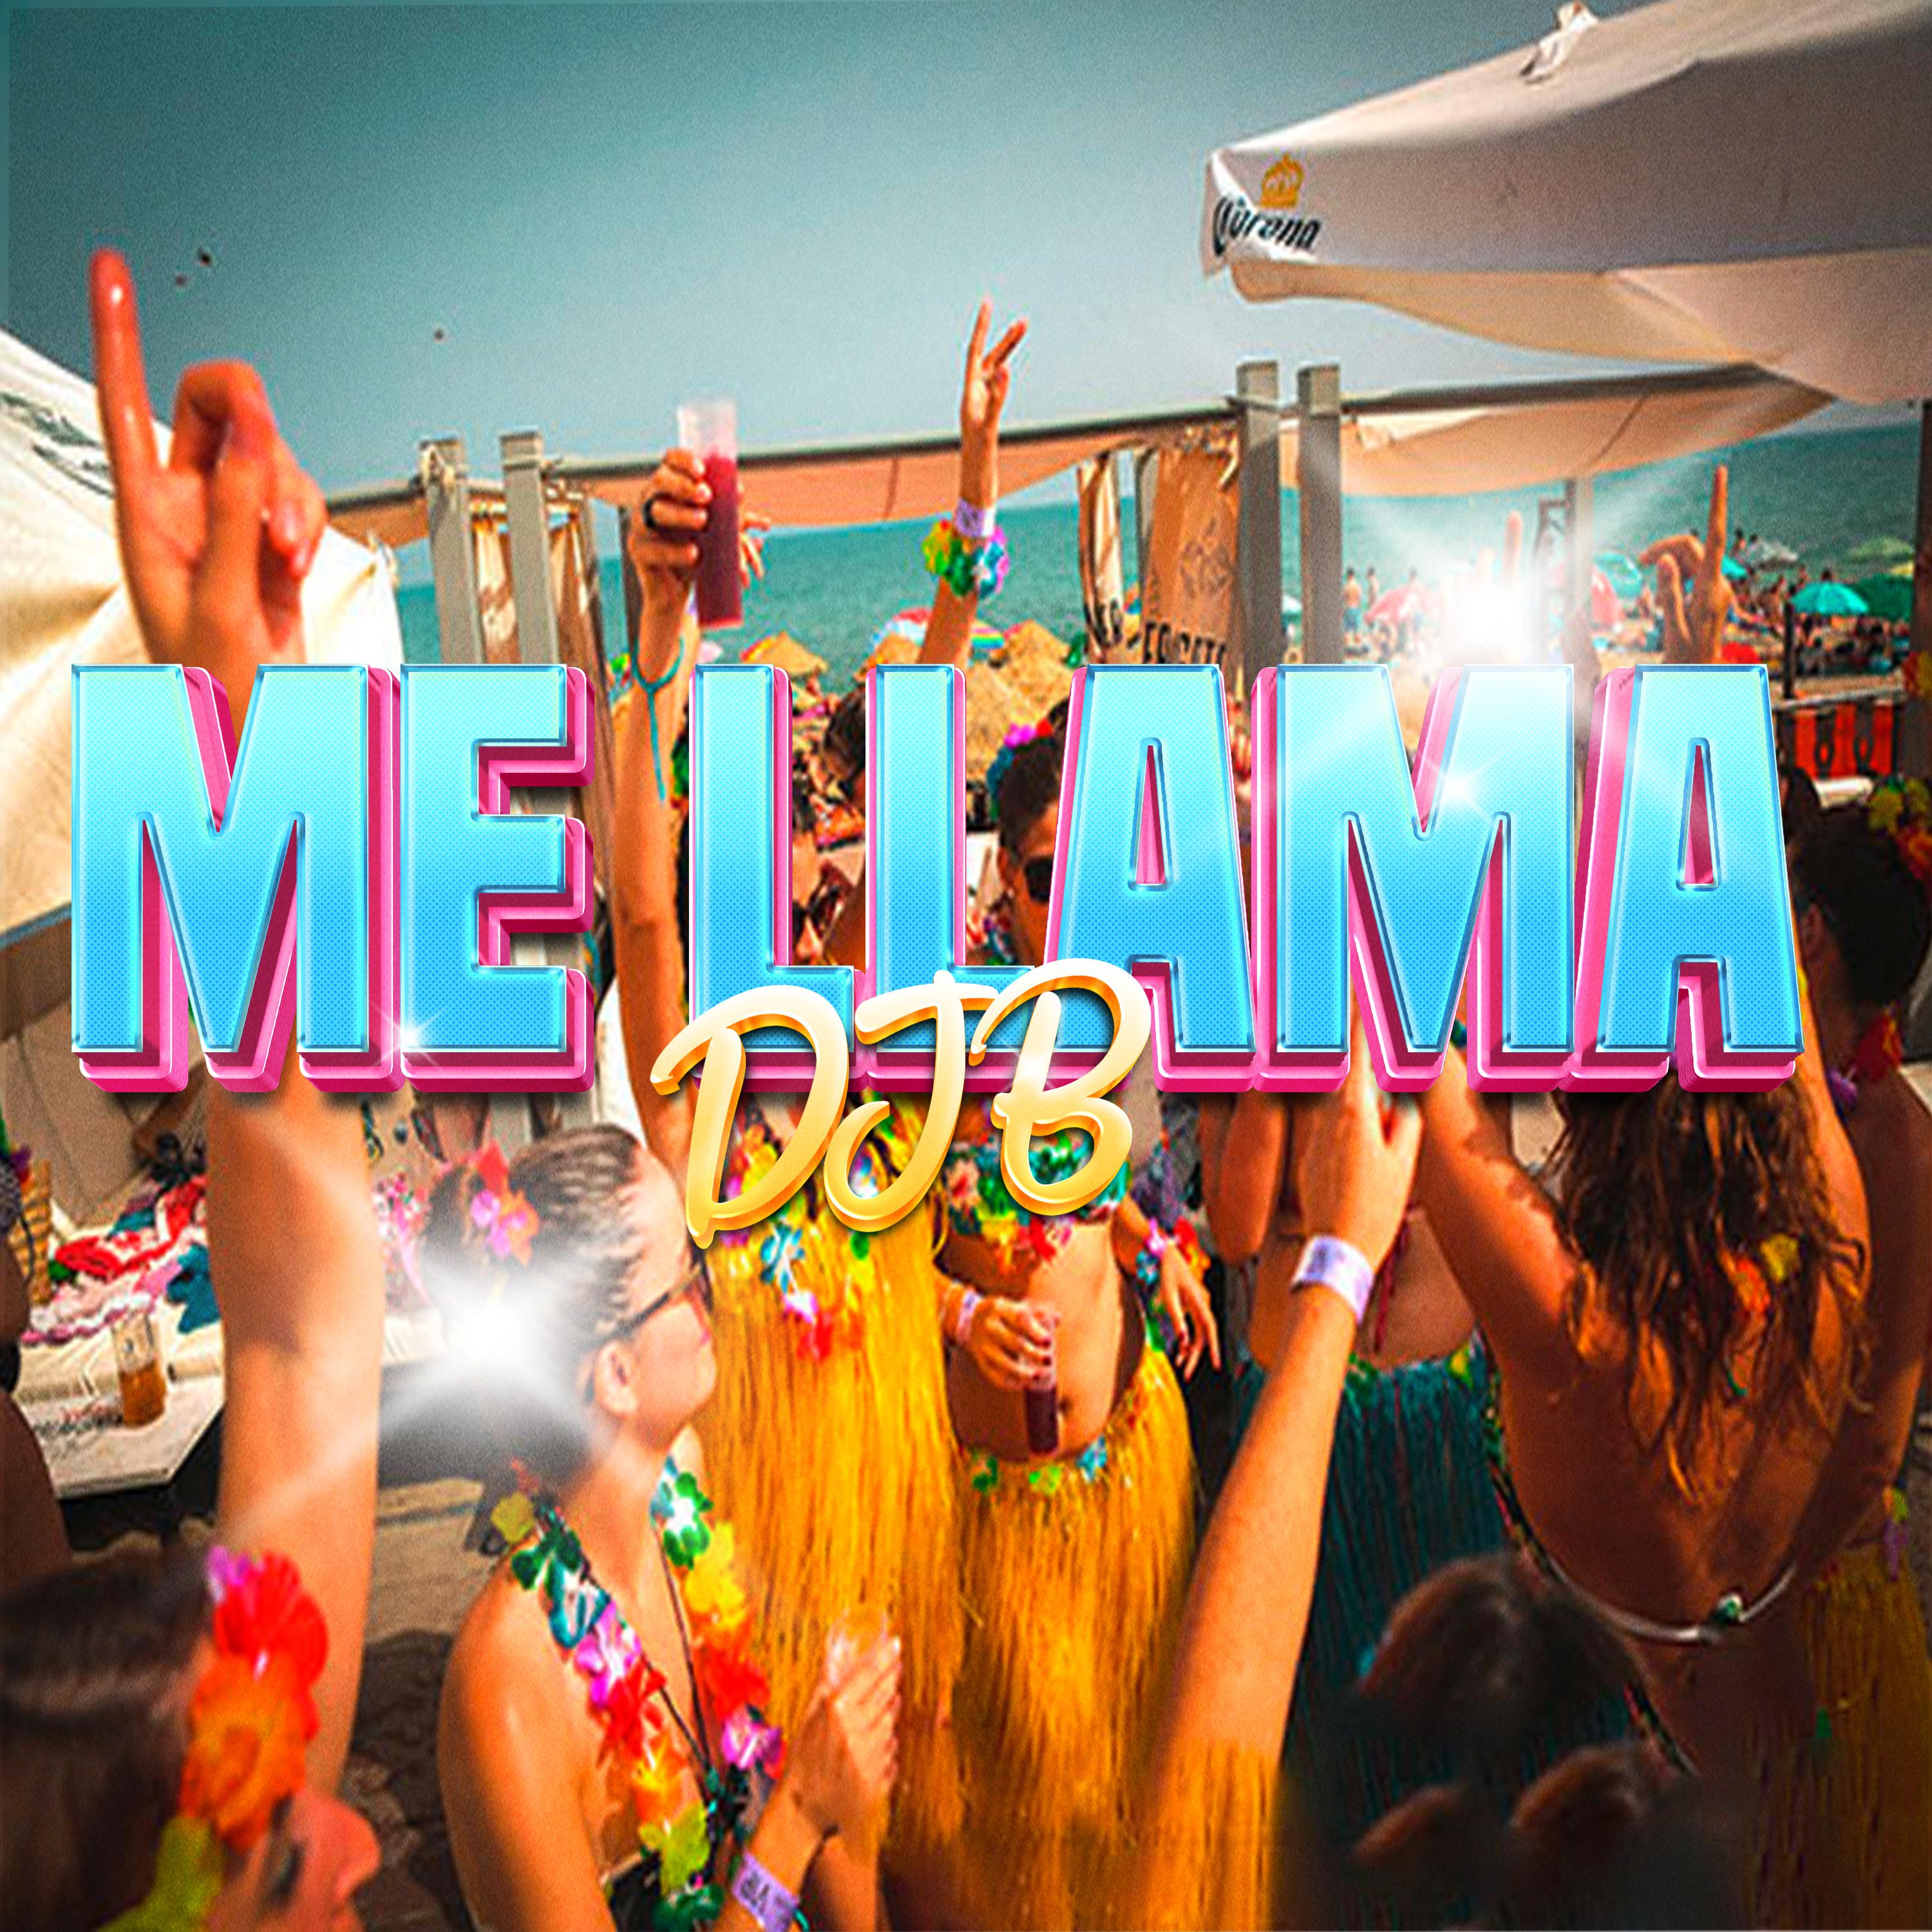 Постер альбома Me Llama